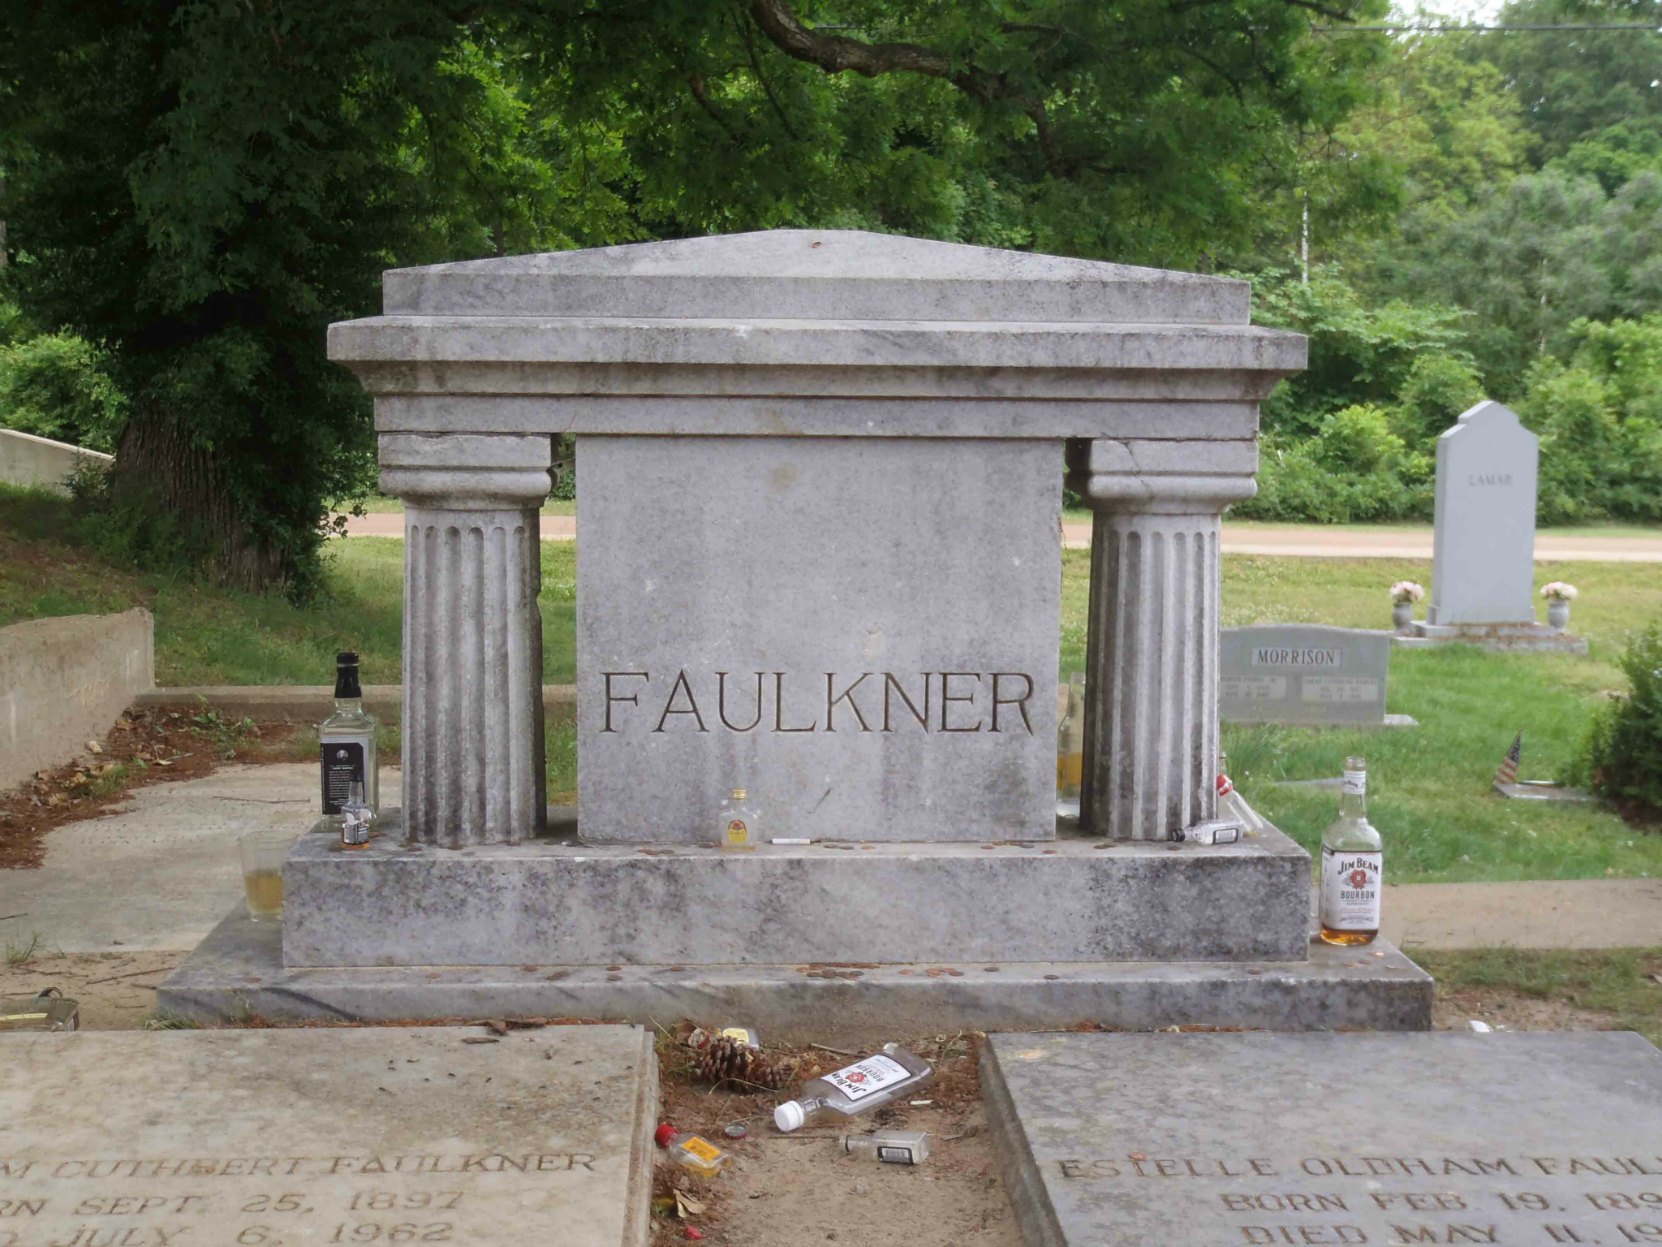 William Faulkner's grave in Oxford, Mississippi. The liquor bottles are tributes left at the grave by William Faulkner's fans.